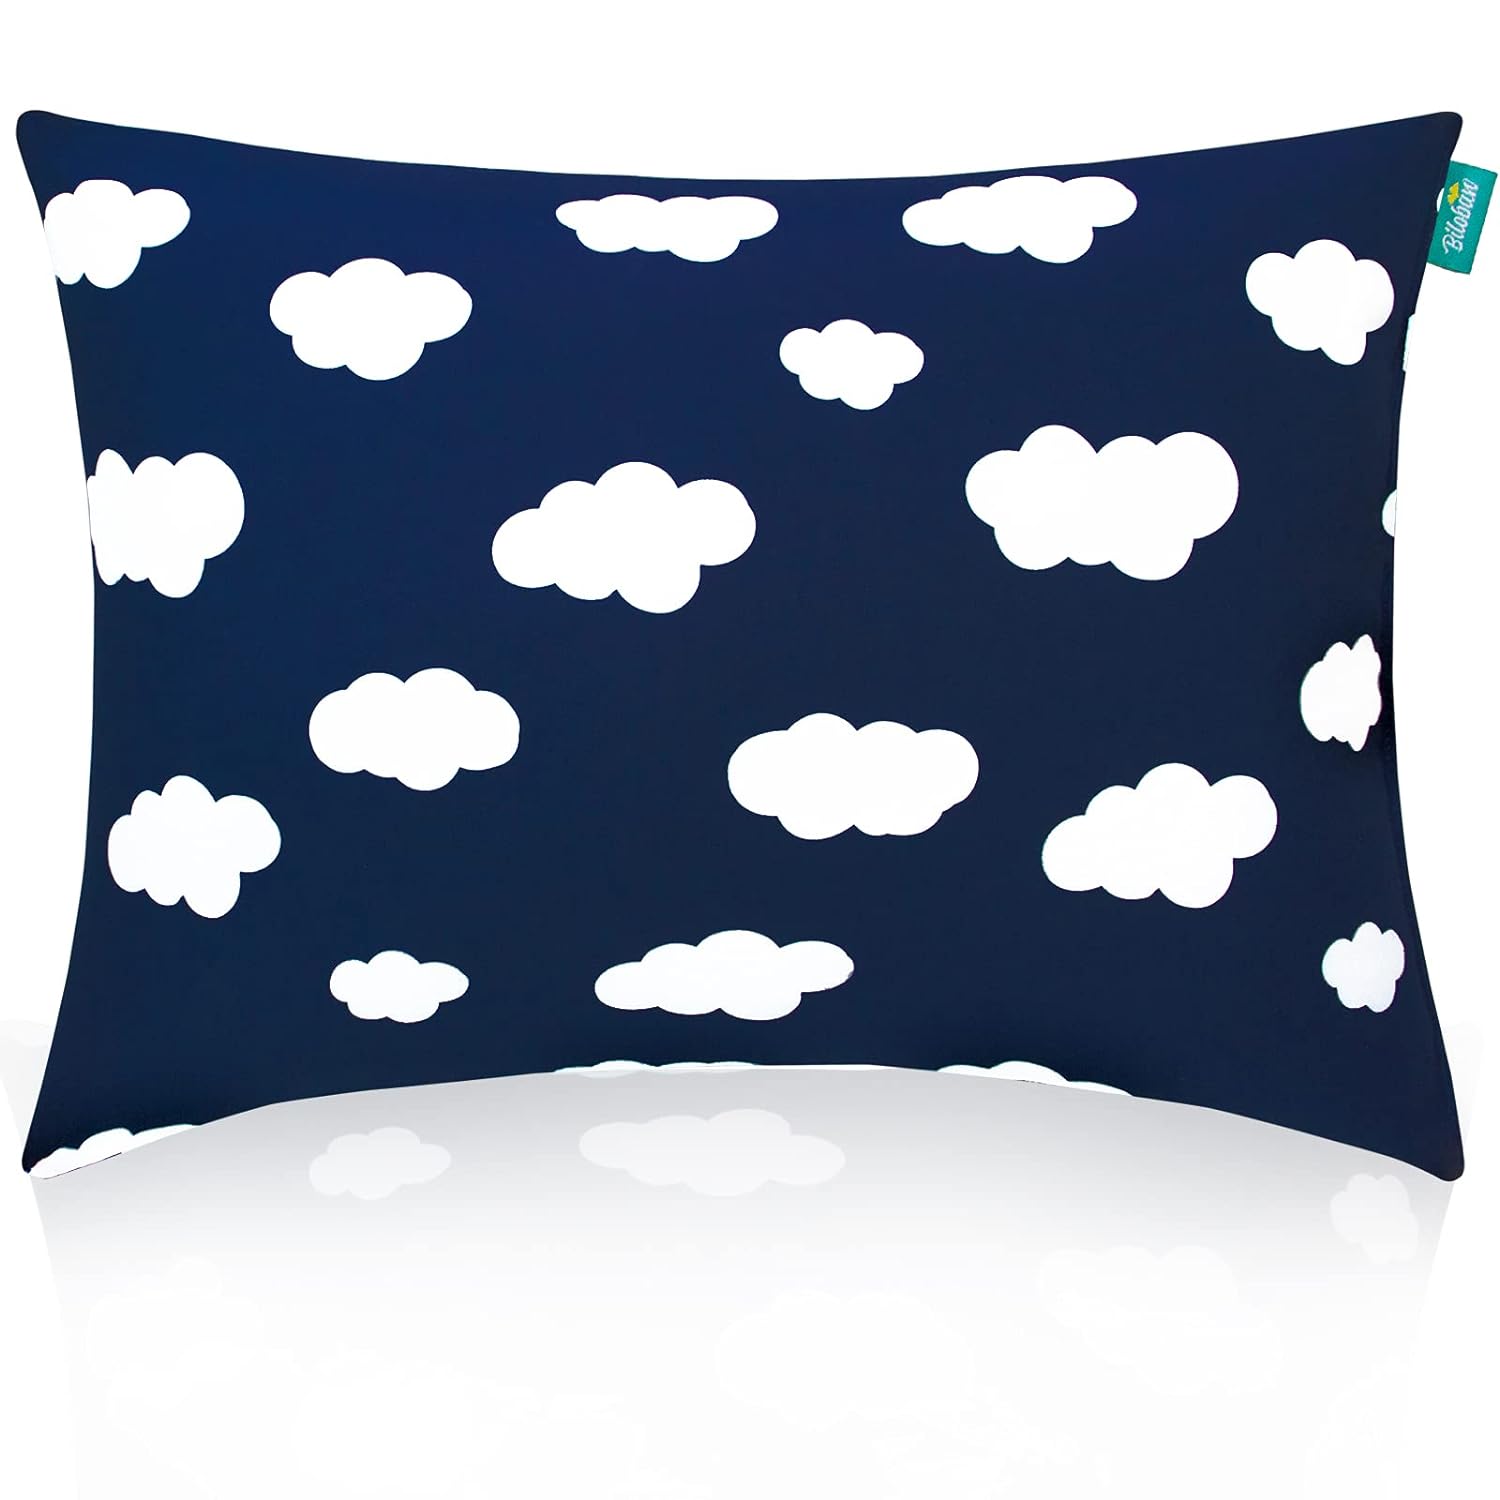 Toddler Pillow - 14" x 19”, Multi-Use, Soft & Skin-Friendly, Navy Cloud - Biloban Online Store